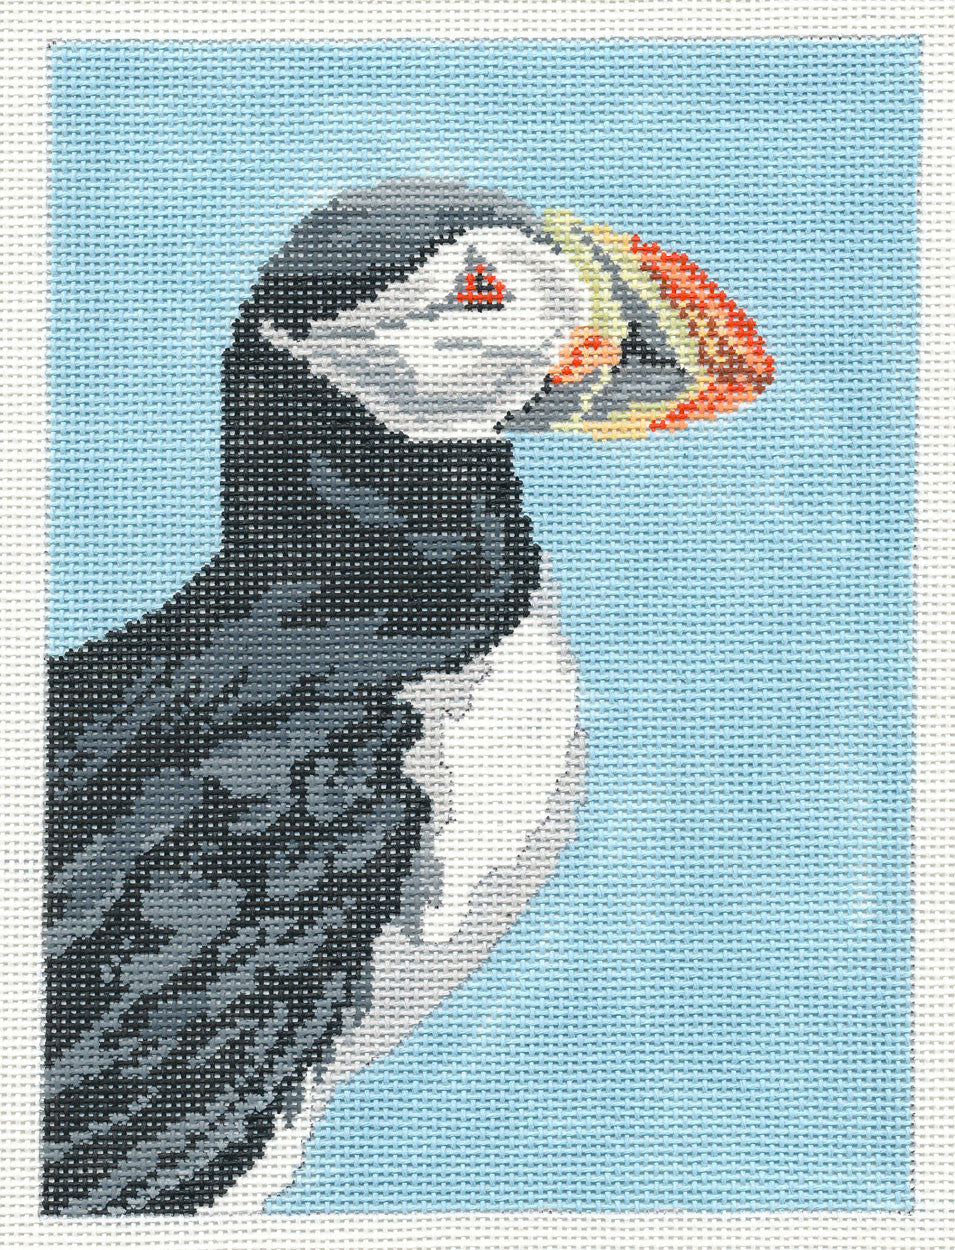 Bird Canvas ~ Elegant Atlantic Puffin Bird handpainted Needlepoint Canvas by Needle Crossings